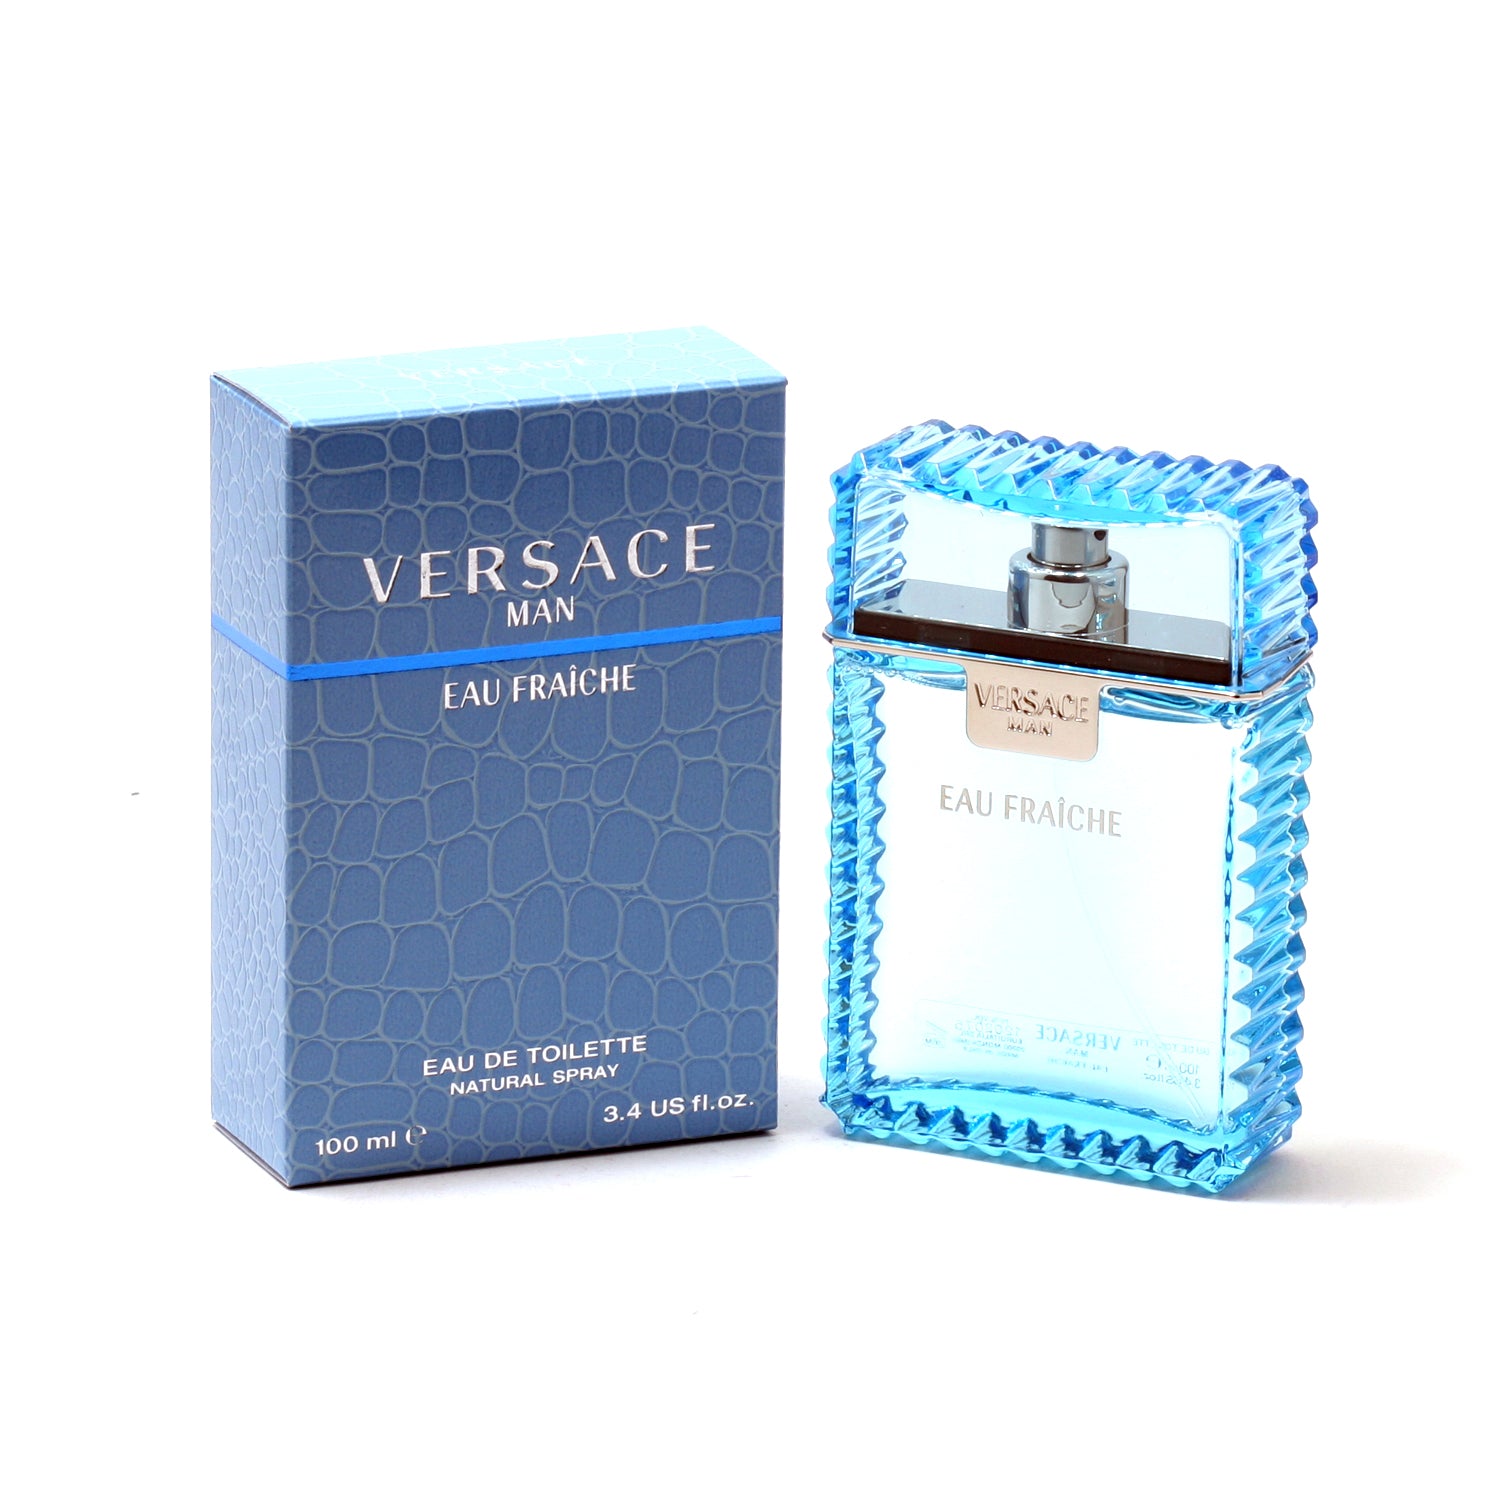 Мужская туалетная вода синяя. Versace man Eau Fraiche 100 ml. Versace man Eau Fraiche m 100ml Premium. Версаче Фреш мужские 100мл. Versace man Eau Fraiche EDT 100ml.